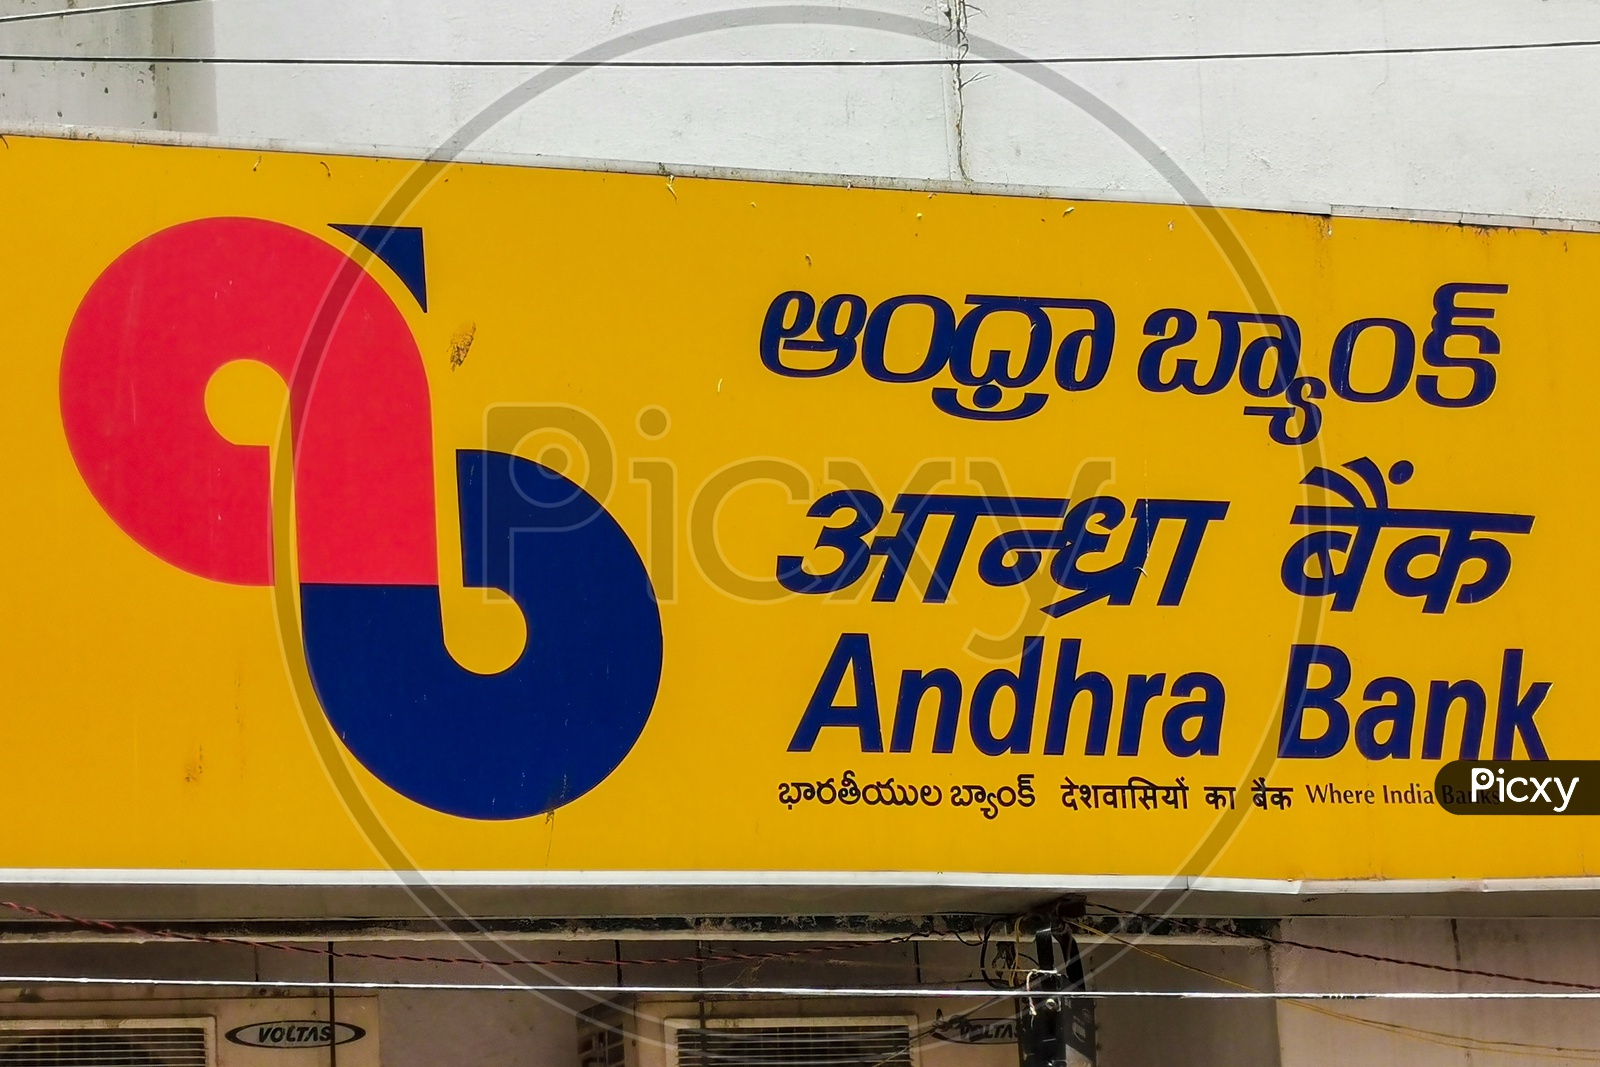 Andhra Bank Name Board